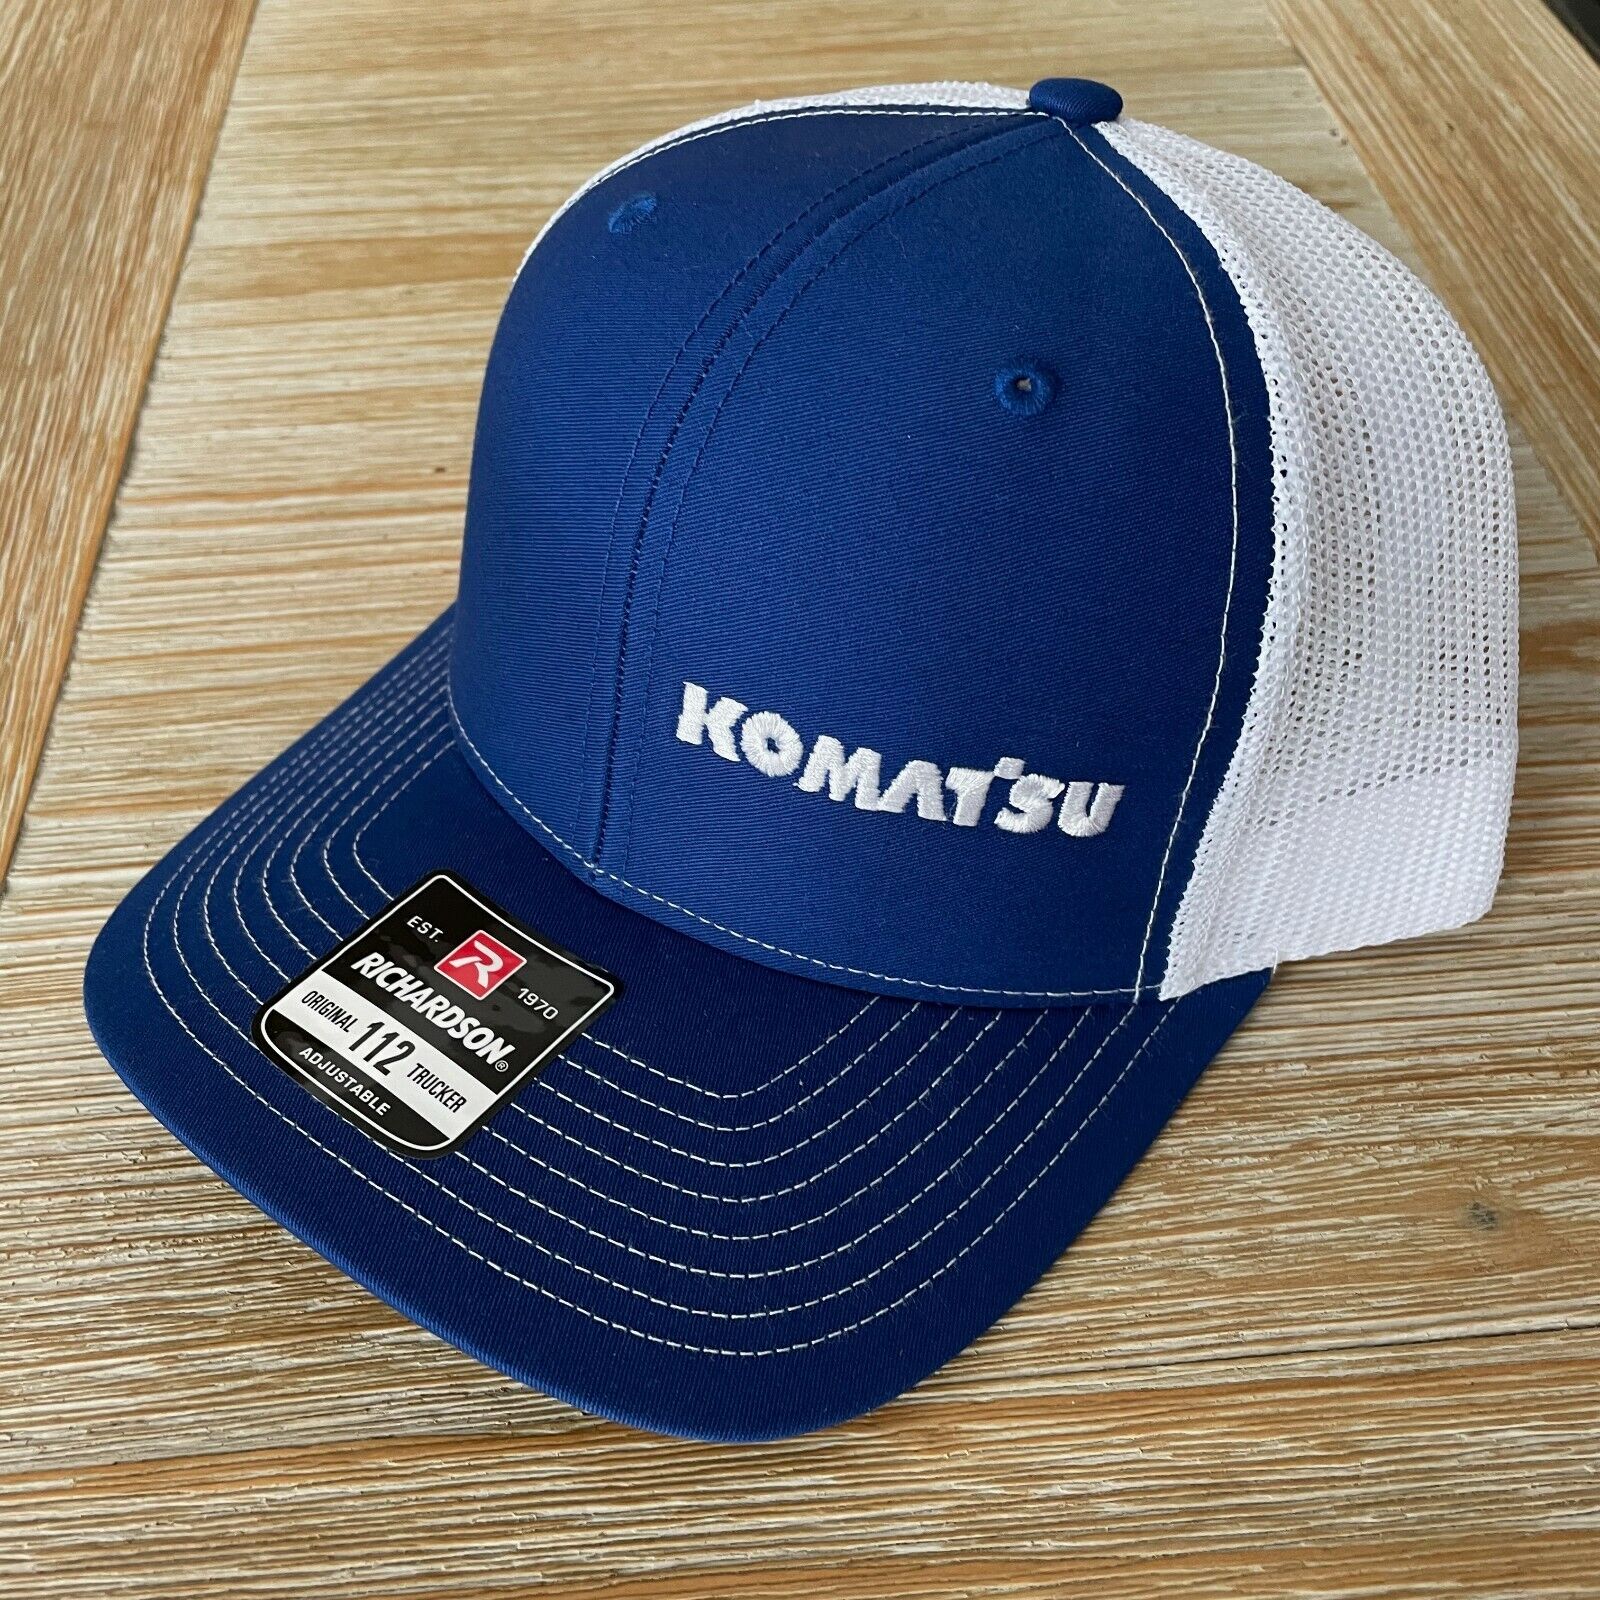 NEW - Komatsu Embroidered Richardson 112 Trucker Hat Cap - Royal Blue